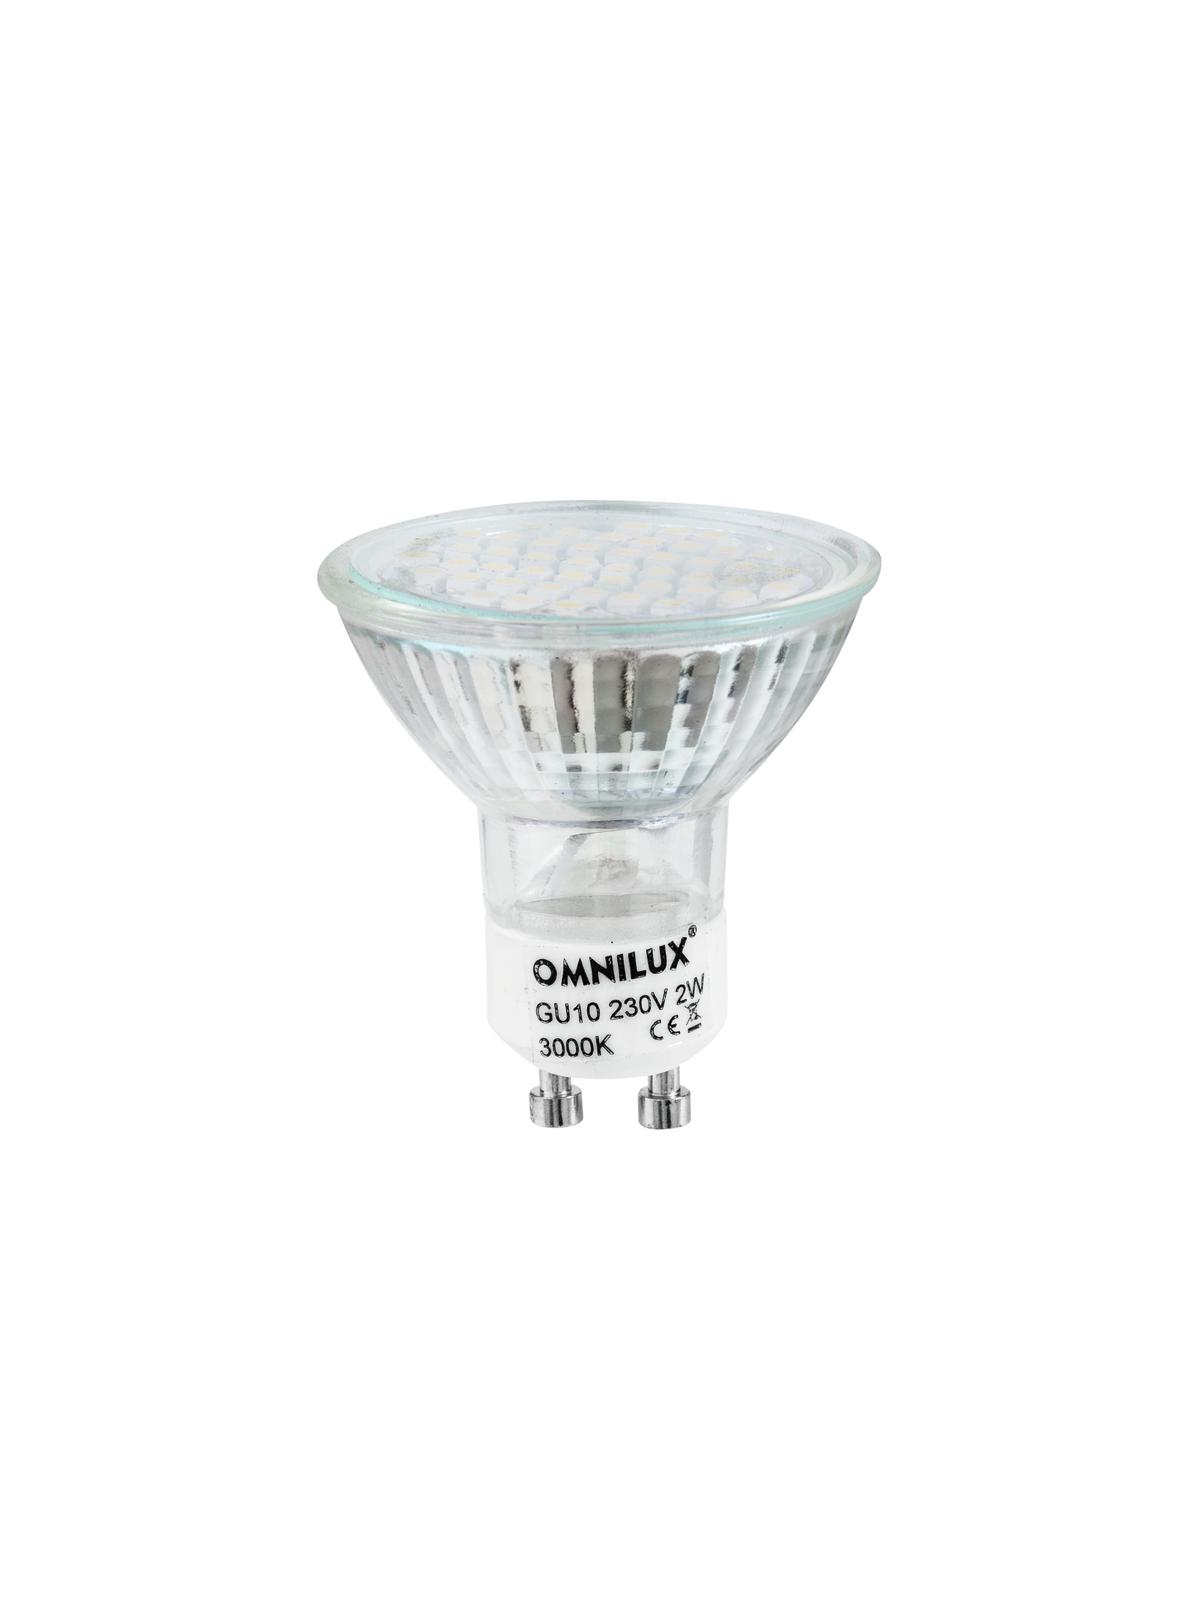 LED žárovka Omnilux GU-10 230V 48 LED 100°, teplá bílá 3000K